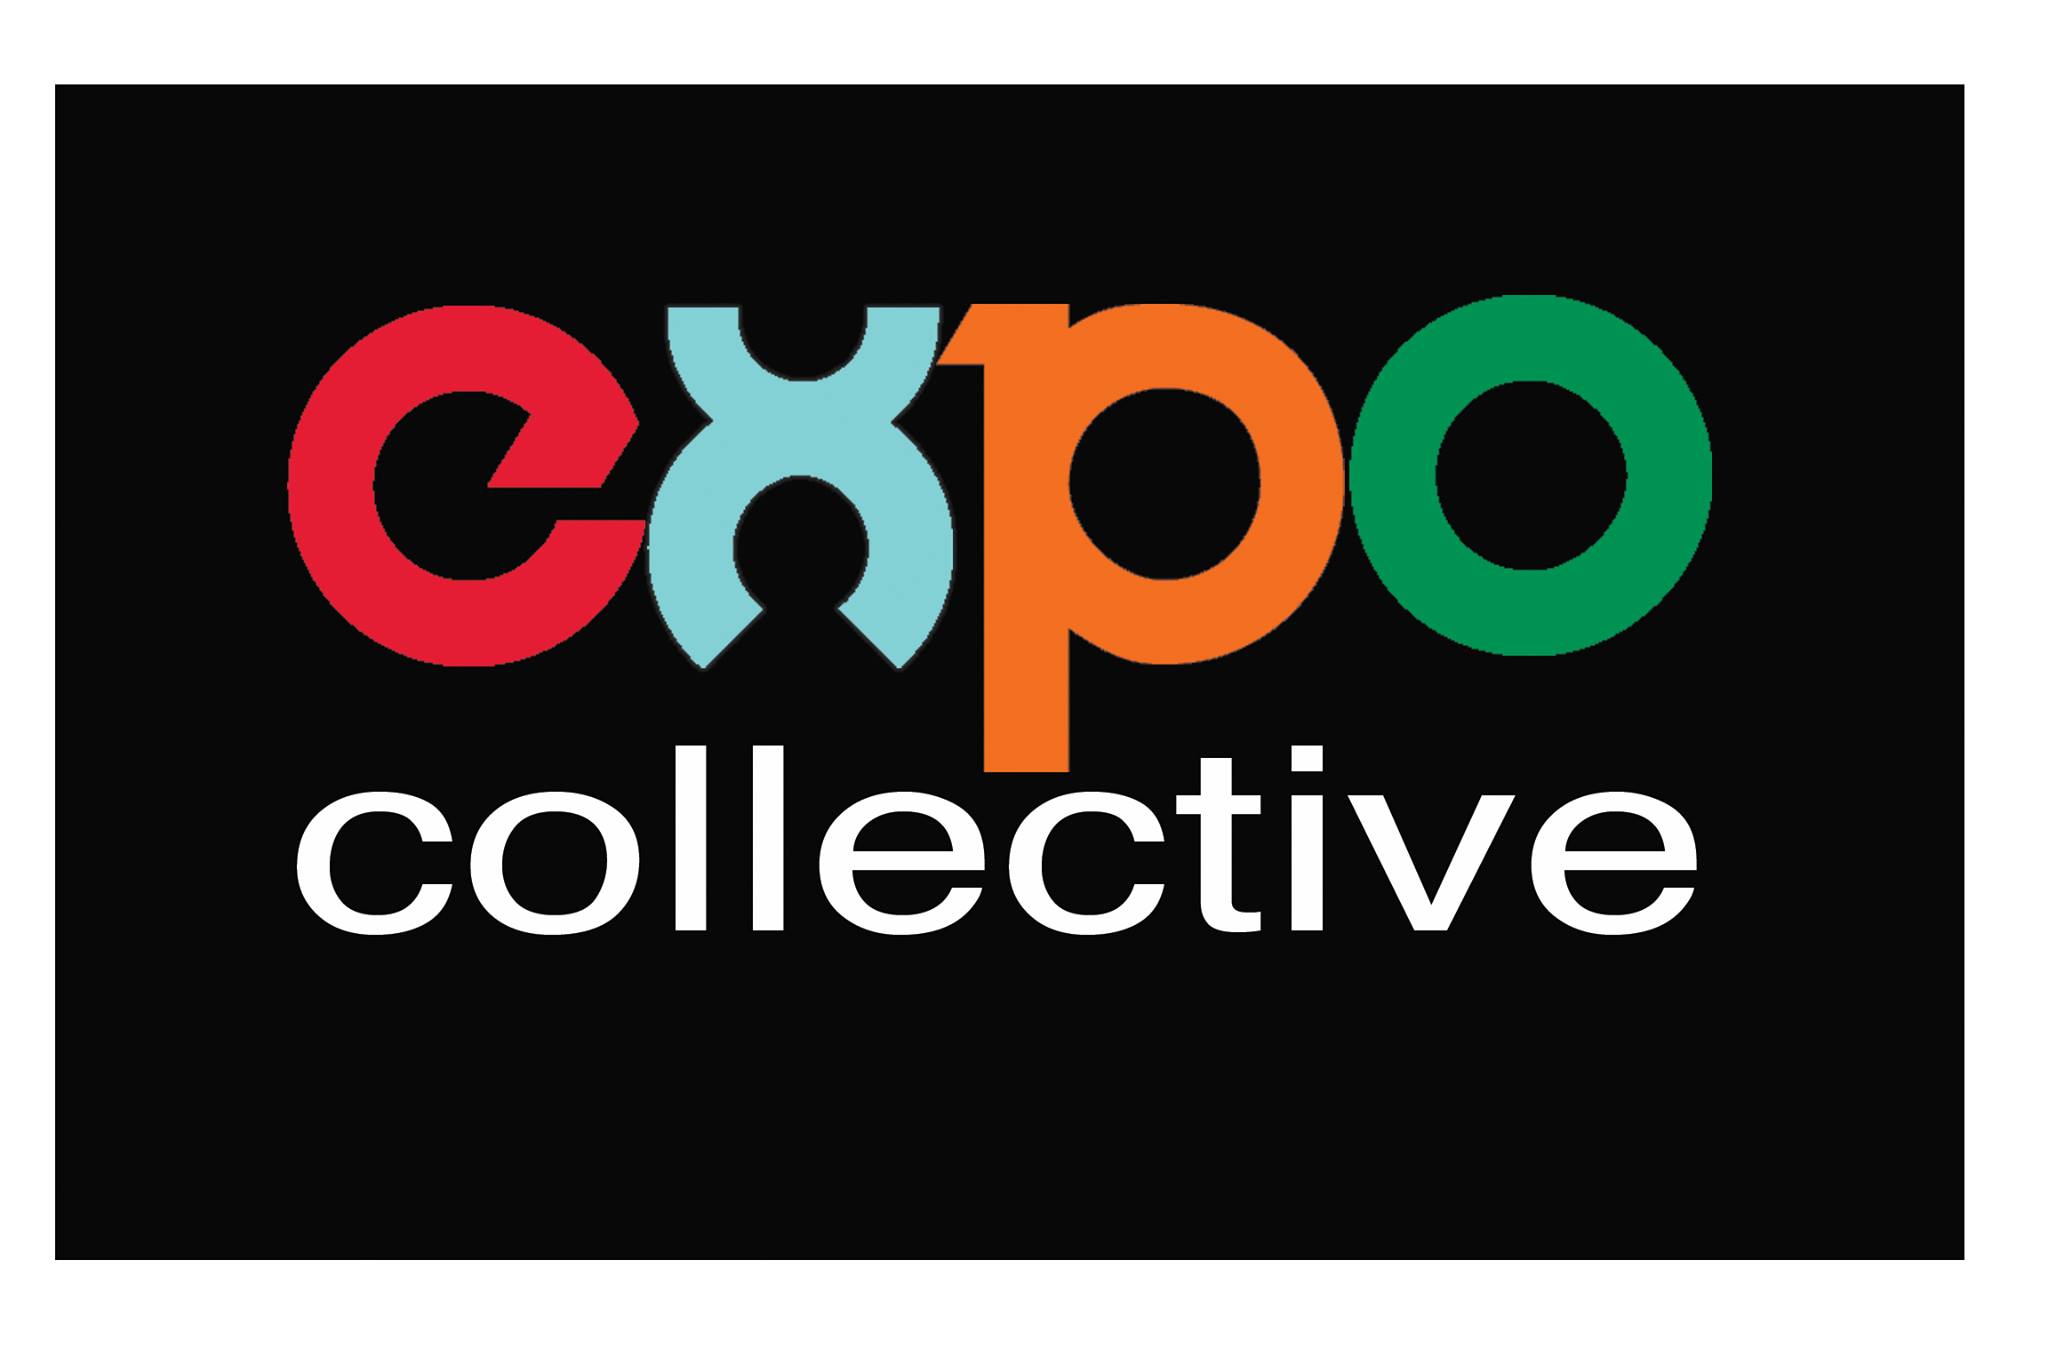 EXPO Collective